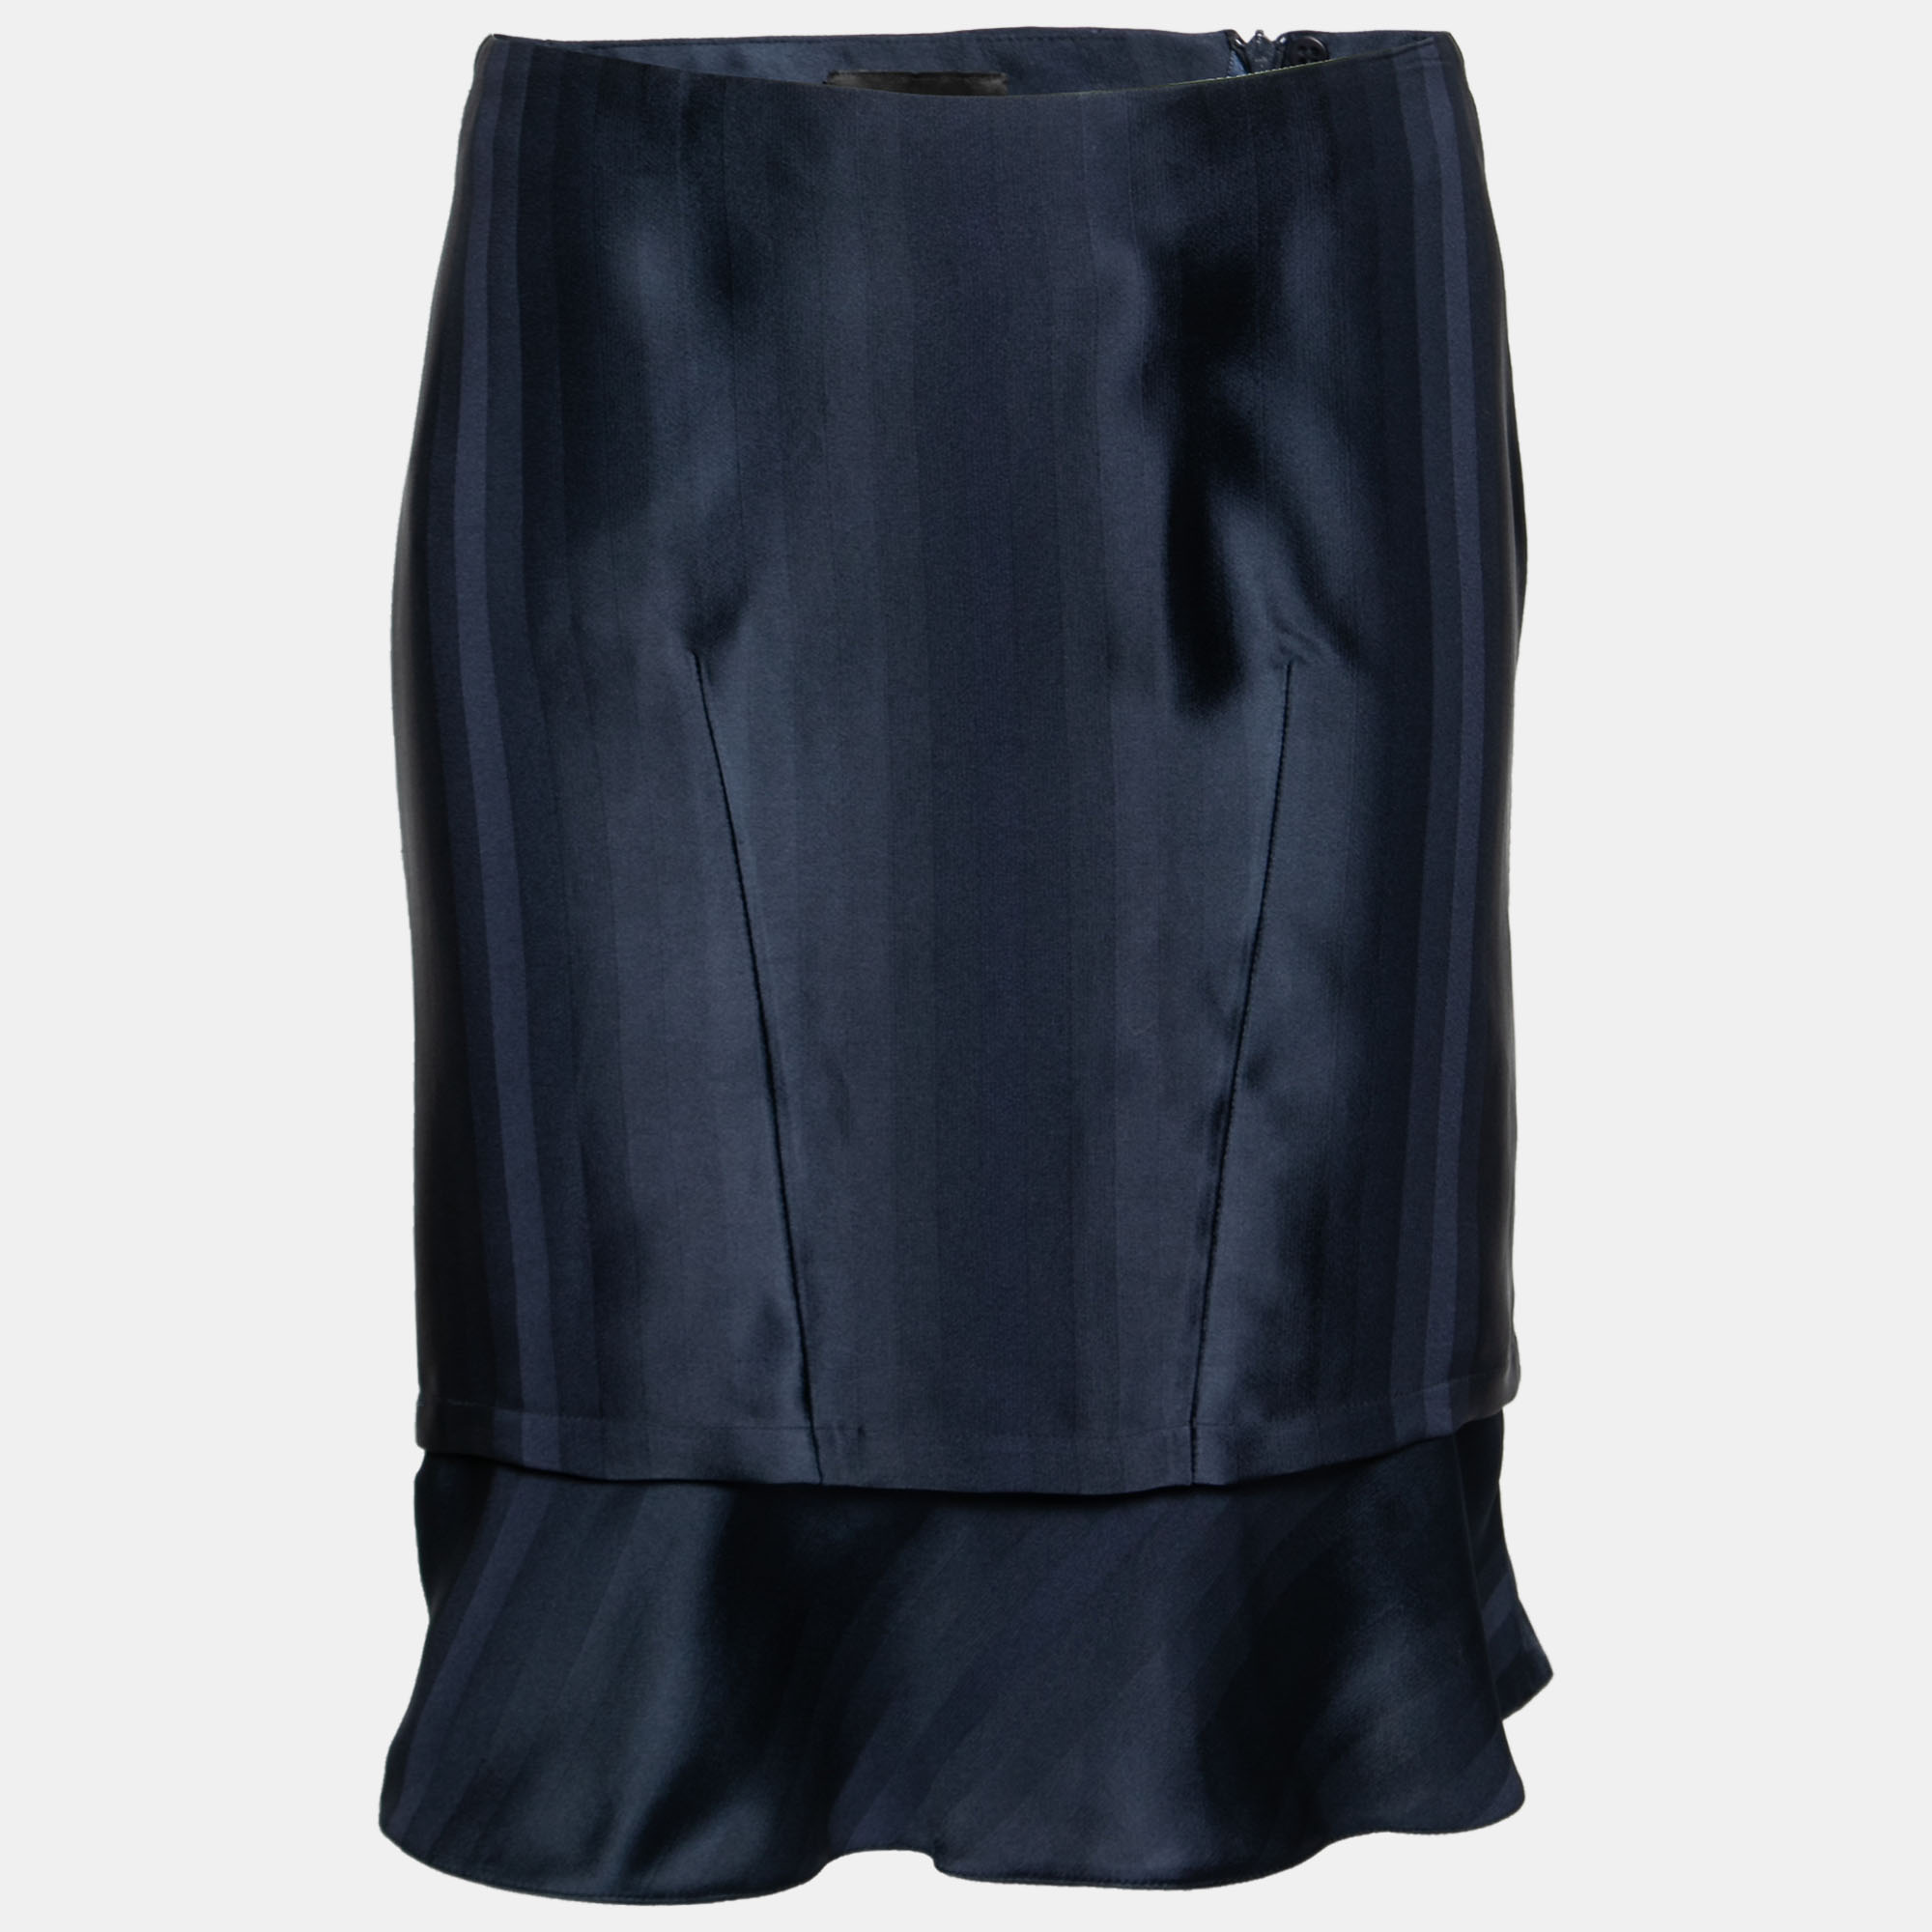 Emporio armani navy blue satin short skirt s